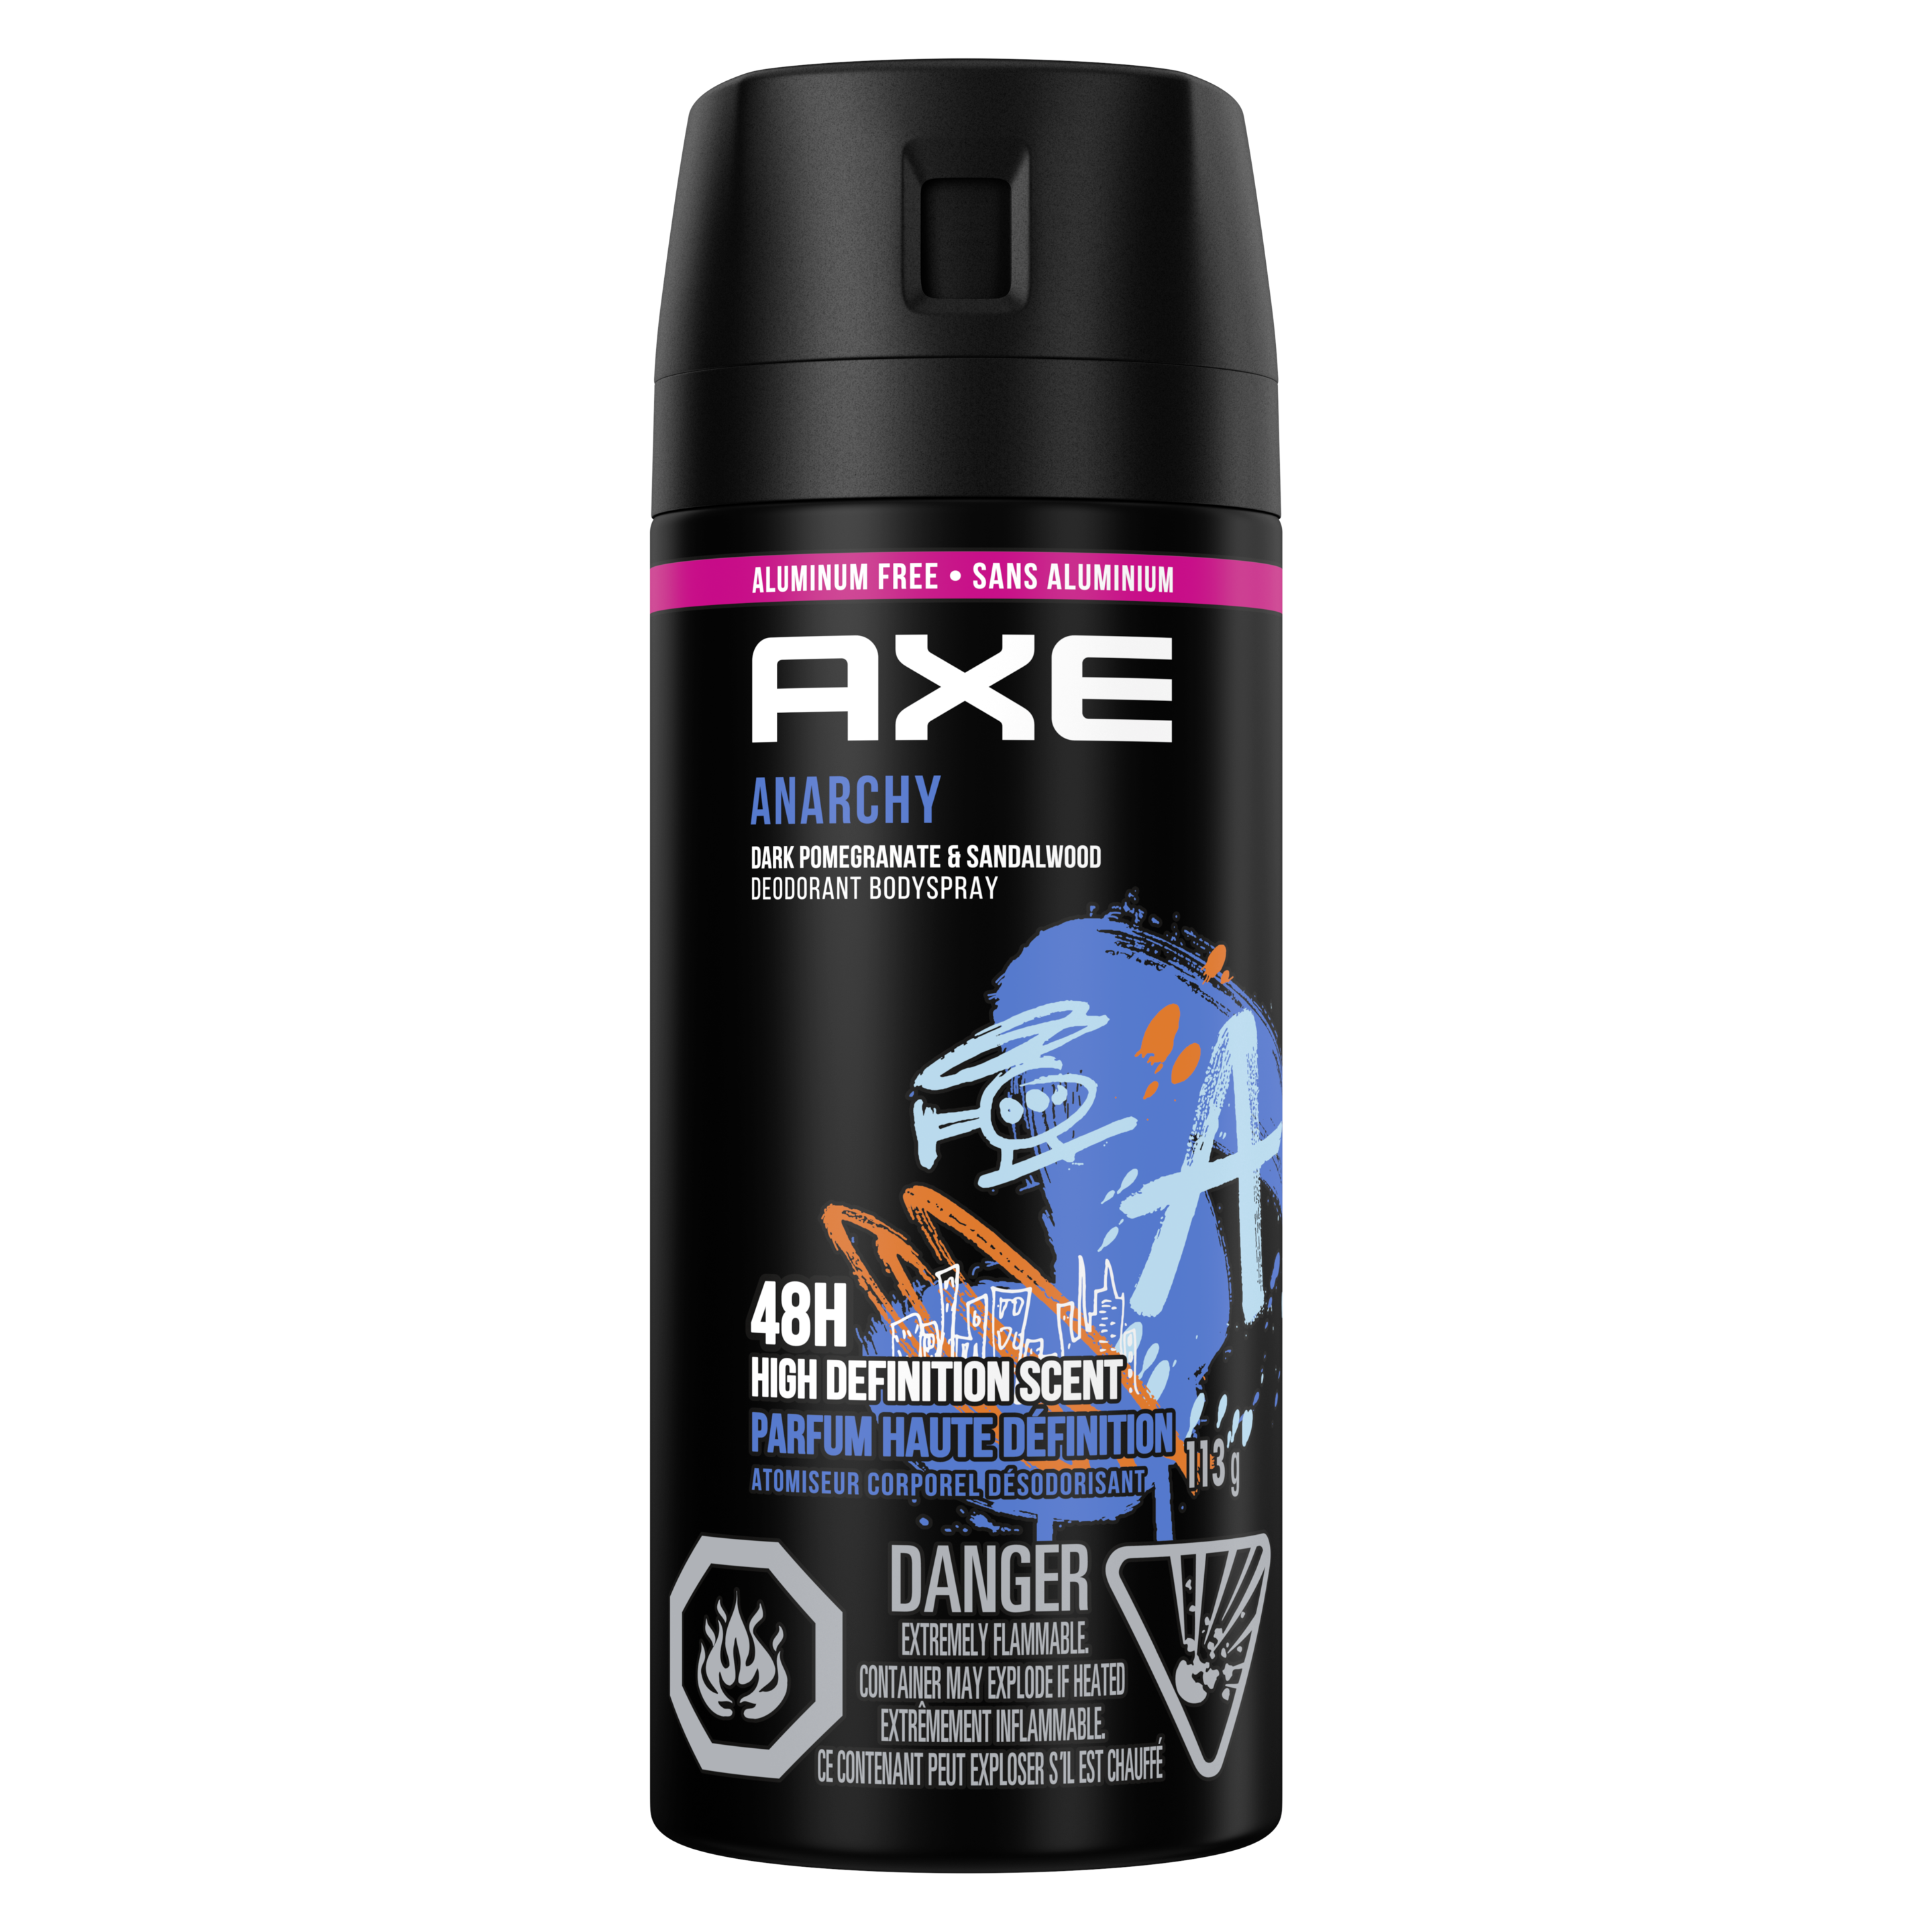 AXE Anarchy Deodorant Body Spray